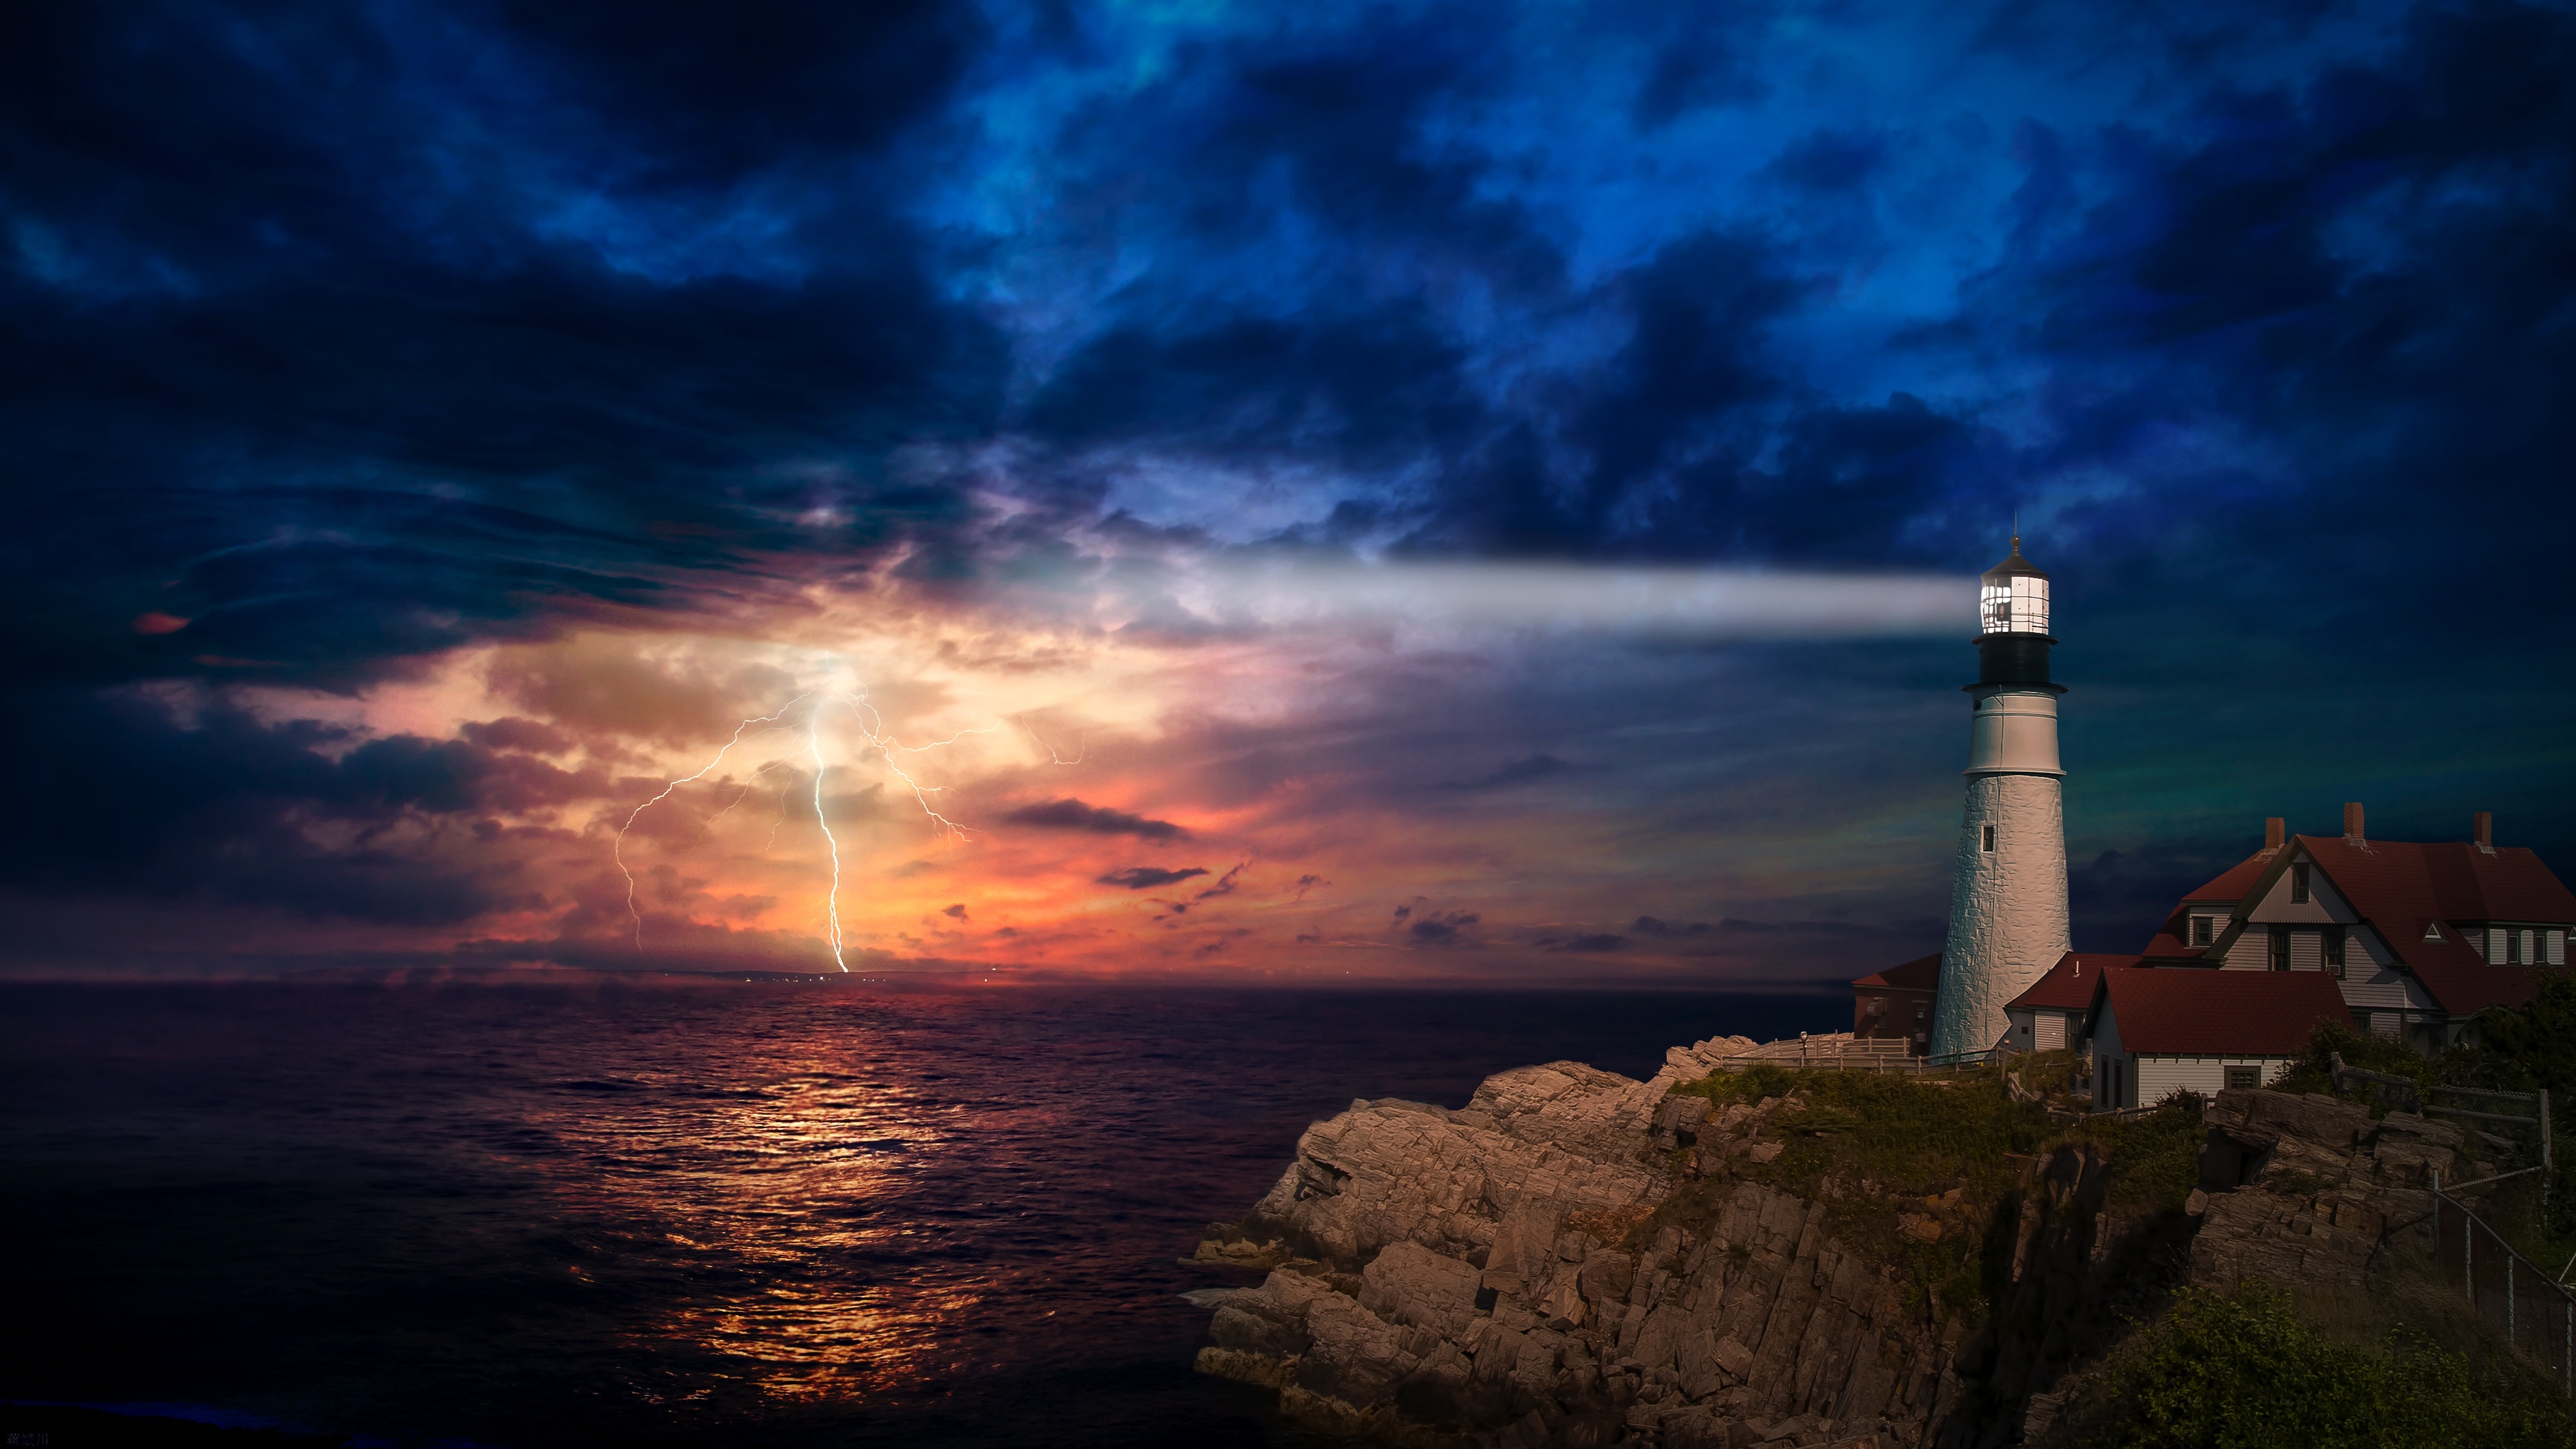 Бесплатное фото Грозовой закат на море у маяка